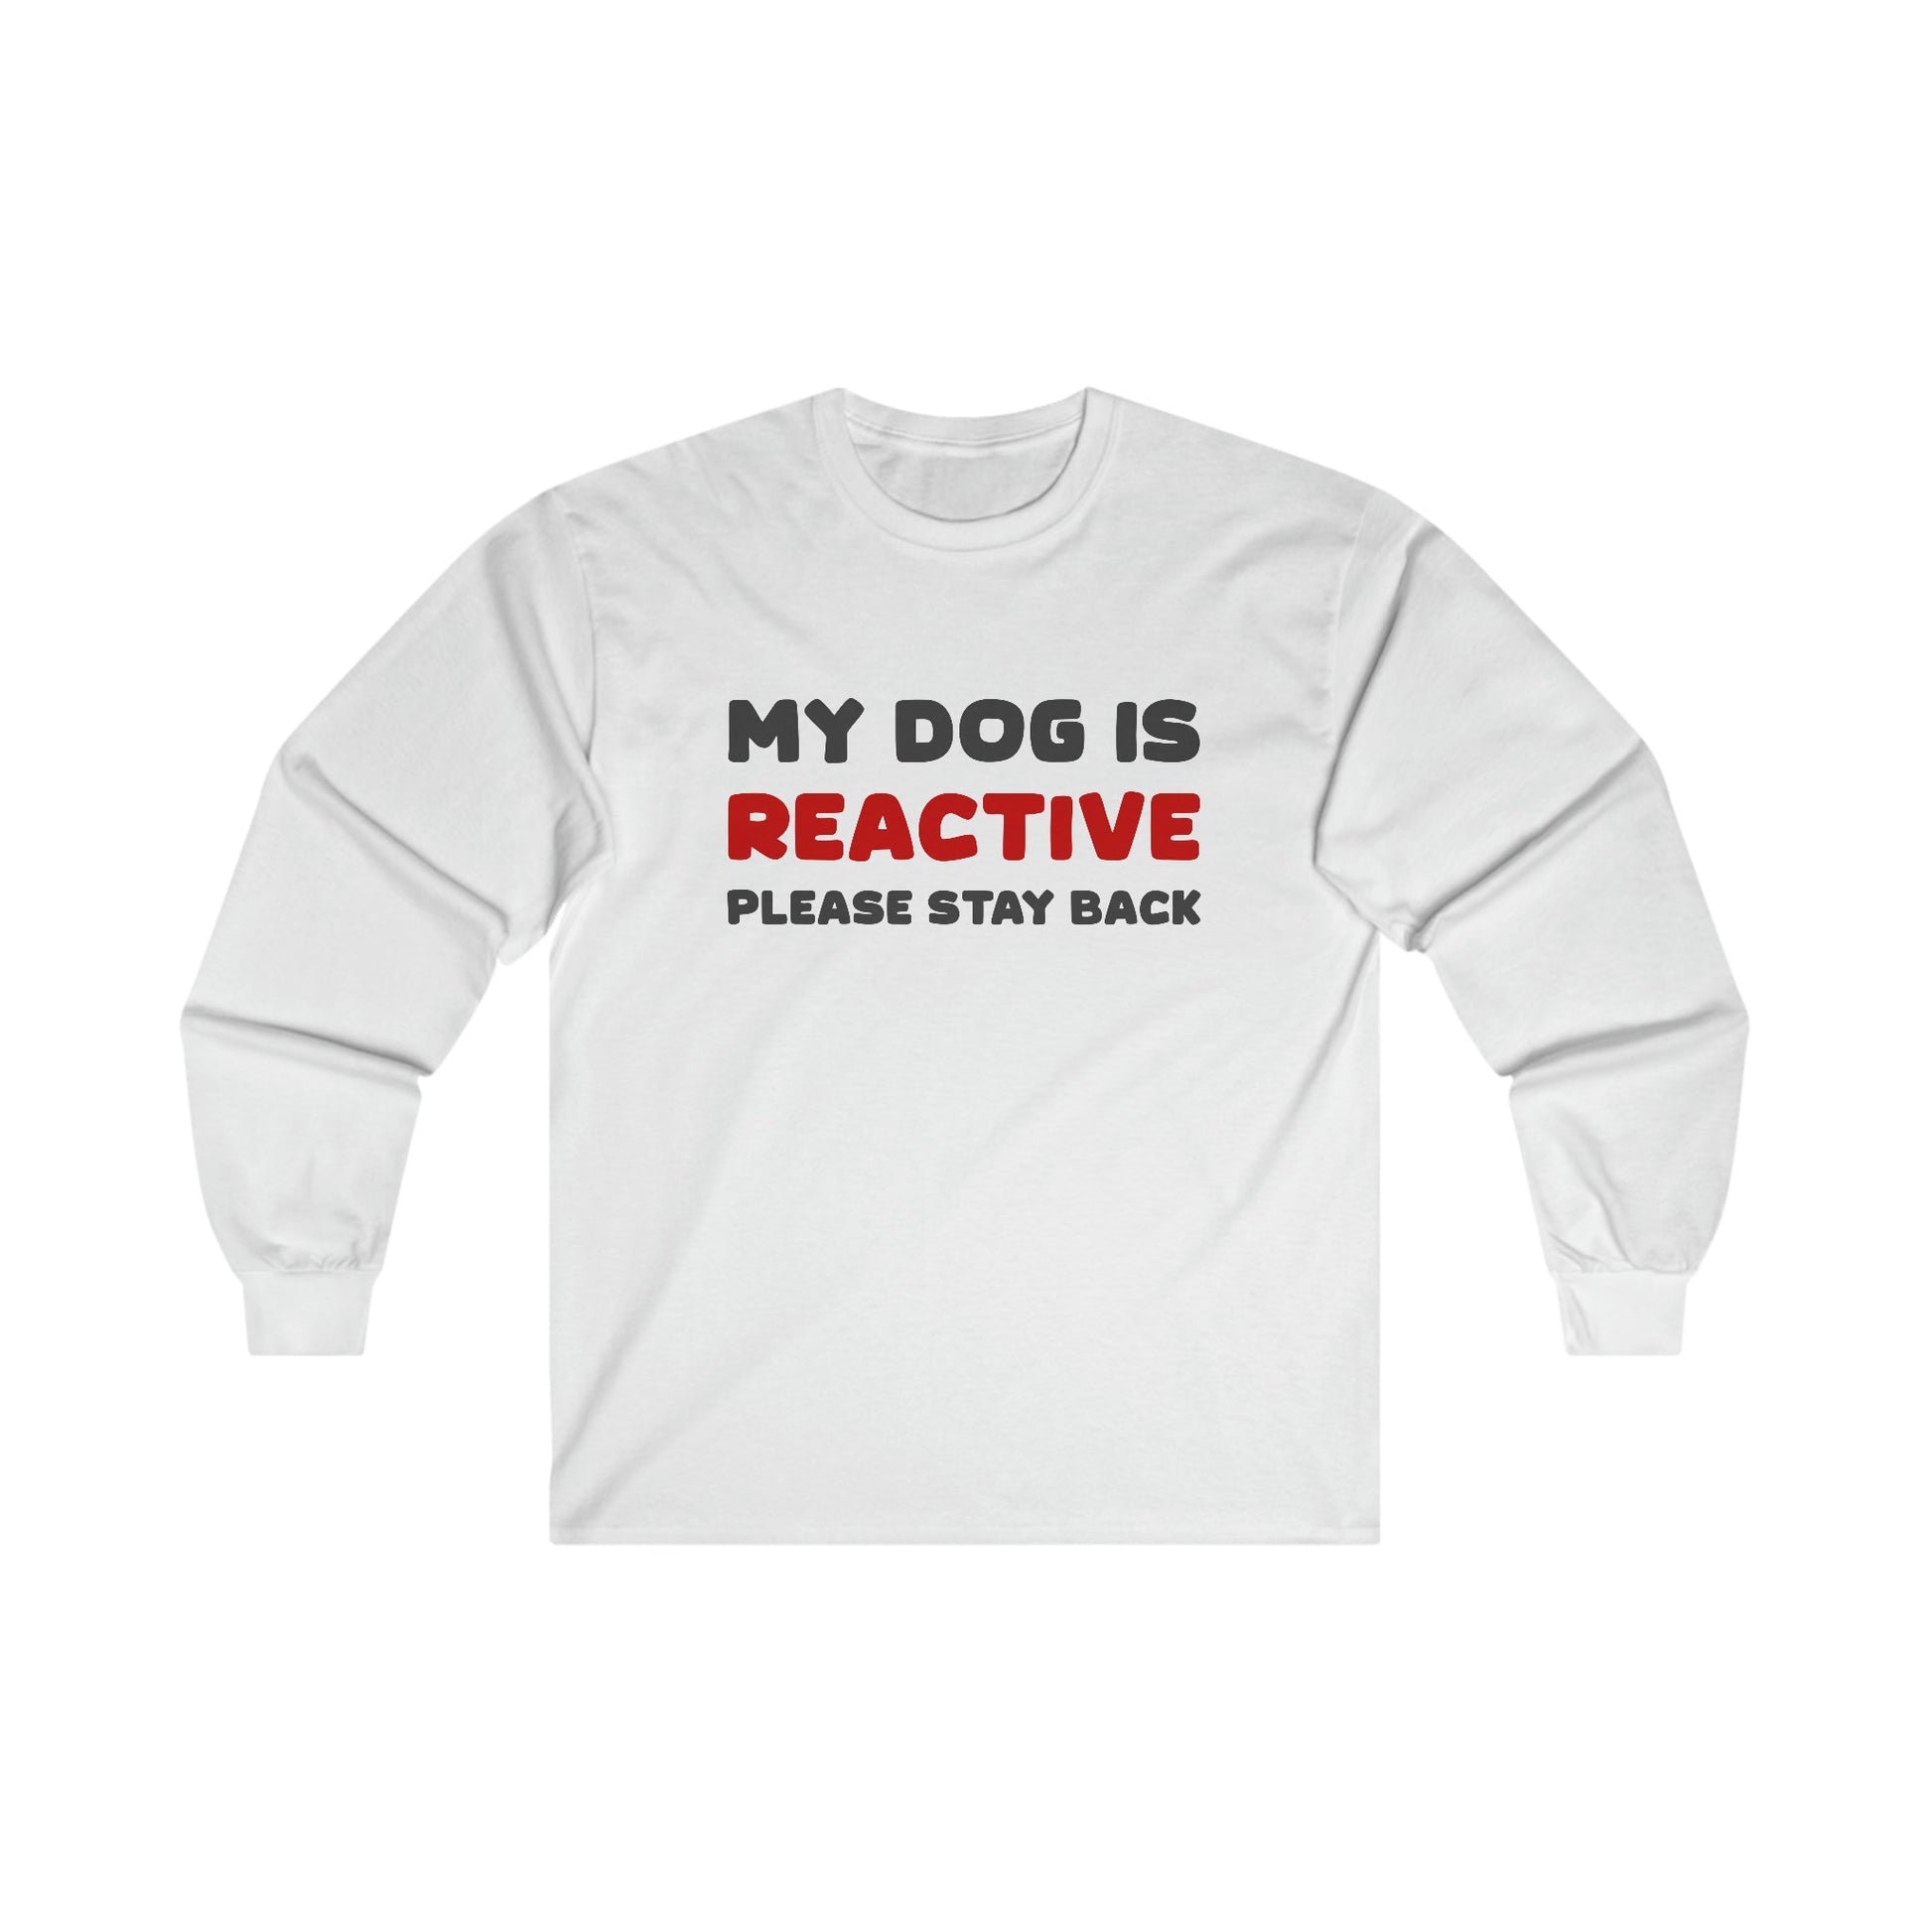 My Dog Is Reactive | 2-Sided Print | Long Sleeve Tee - Detezi Designs-18136269905409202177